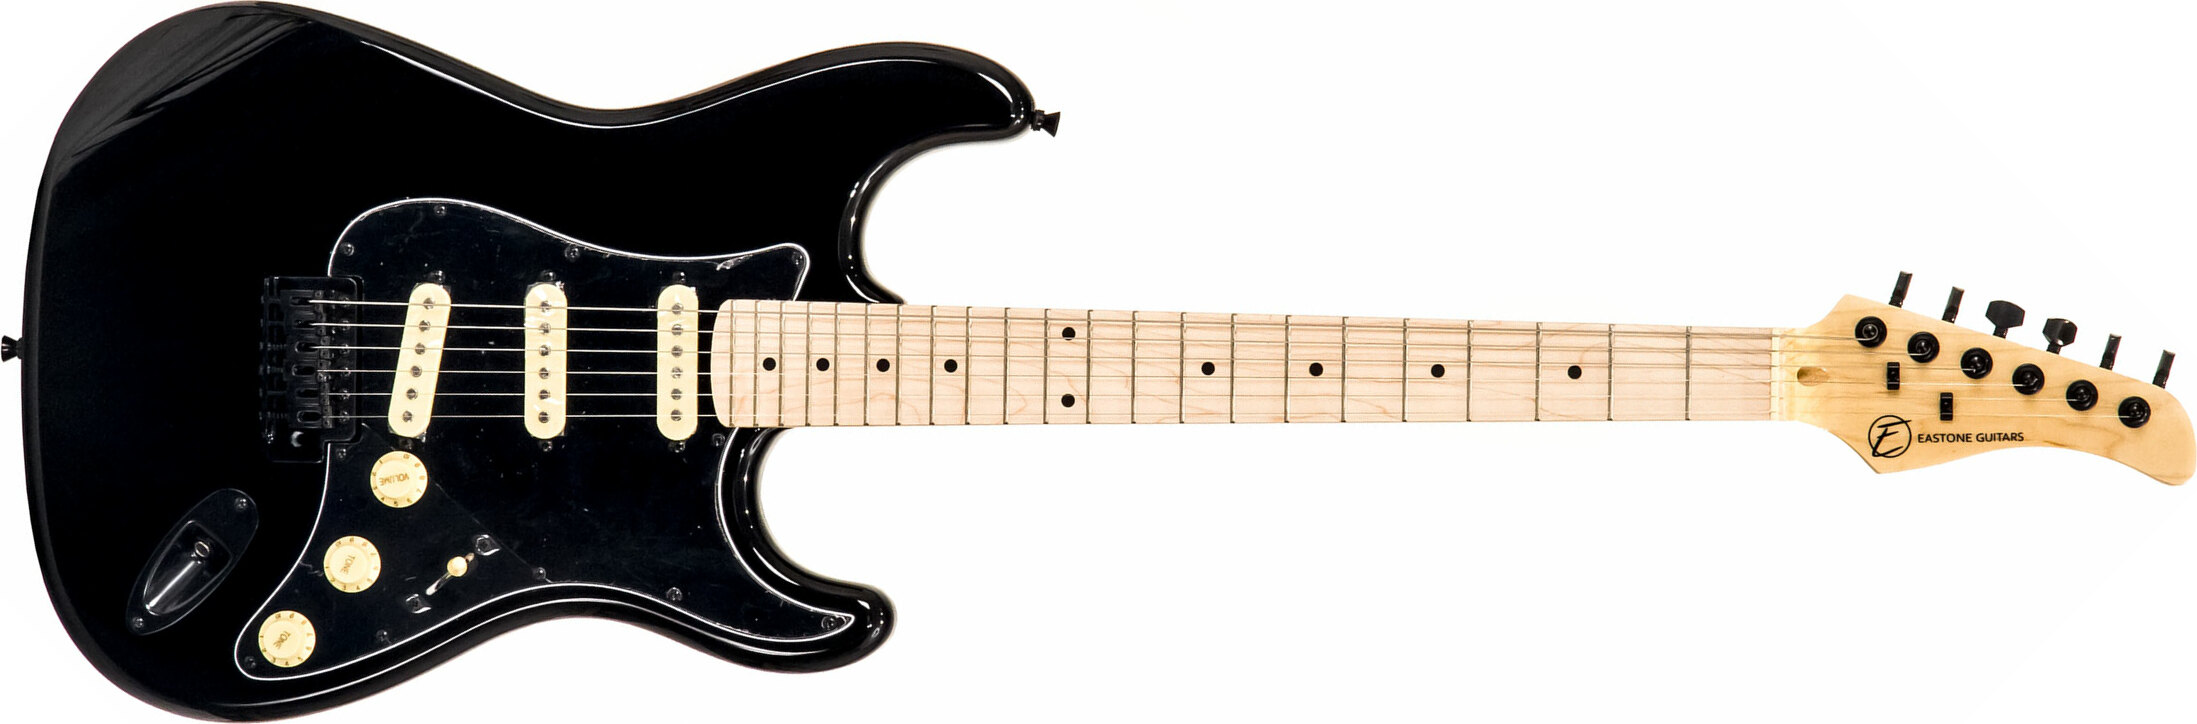 Eastone Str70 Gil Sss Trem Mn - Black - E-Gitarre in Str-Form - Main picture